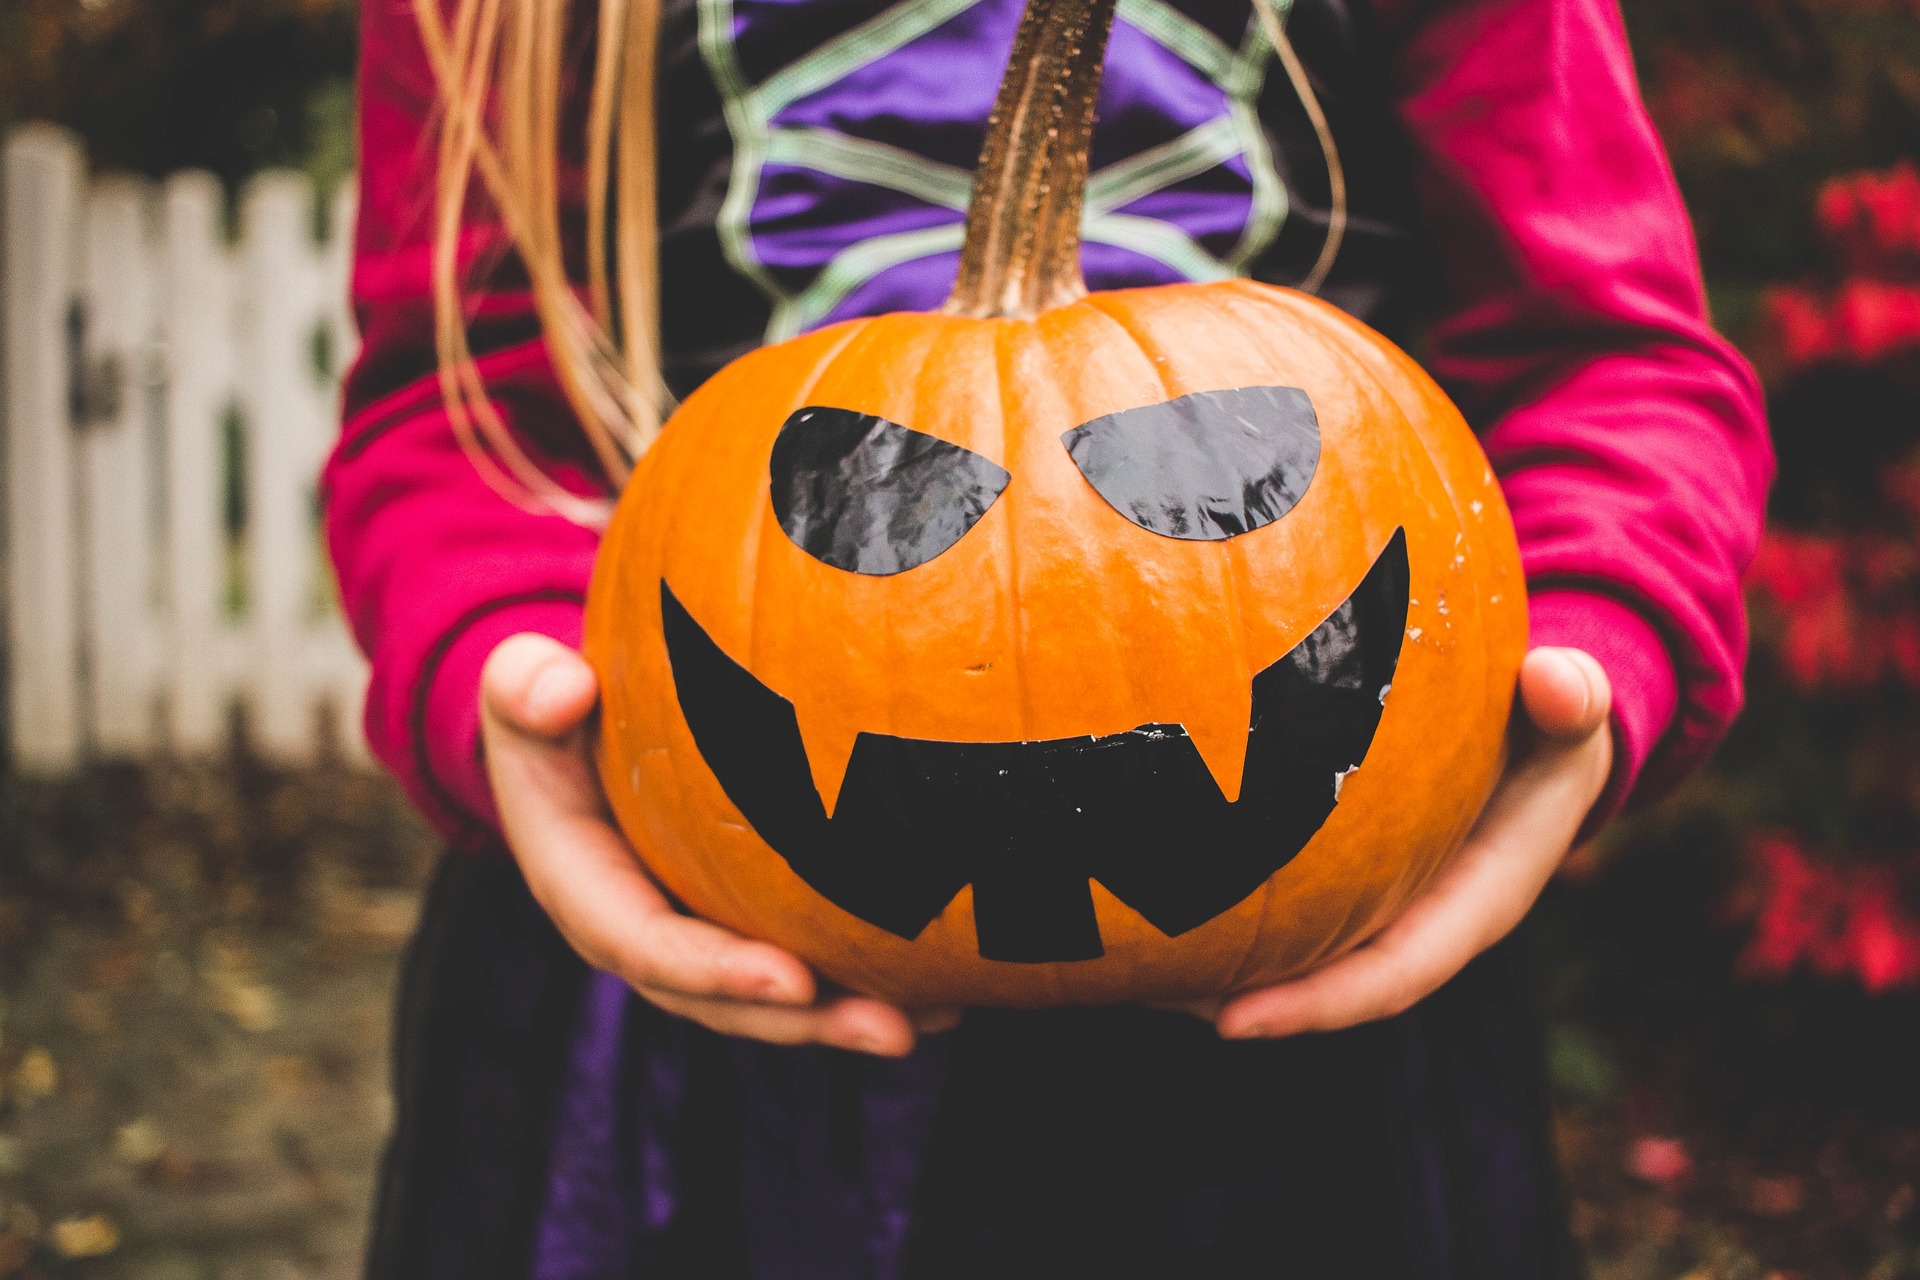 Charmingfare Farm Halloween Events – Use Promo Code ‘RADIO’ And Save 25%